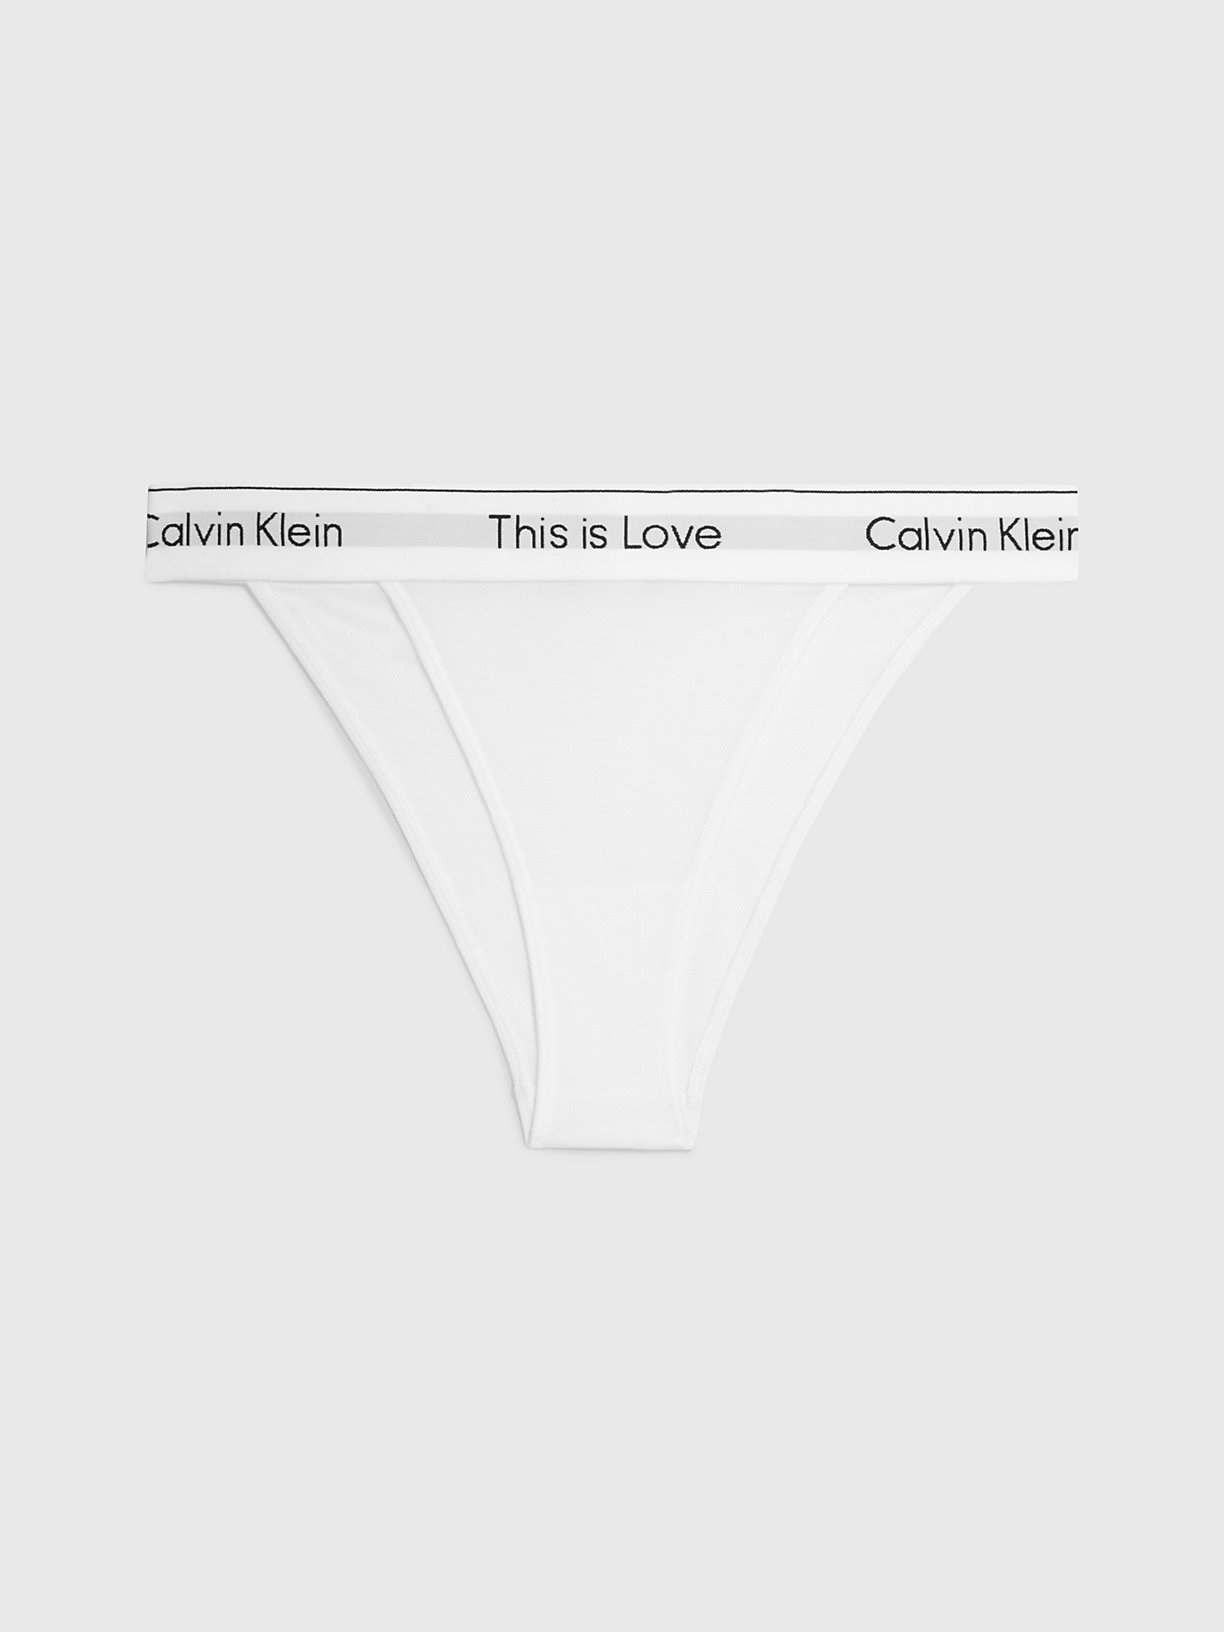 Kalhotky CALVIN KLEIN (QF7205E-01), Velikost L, Barva bílá